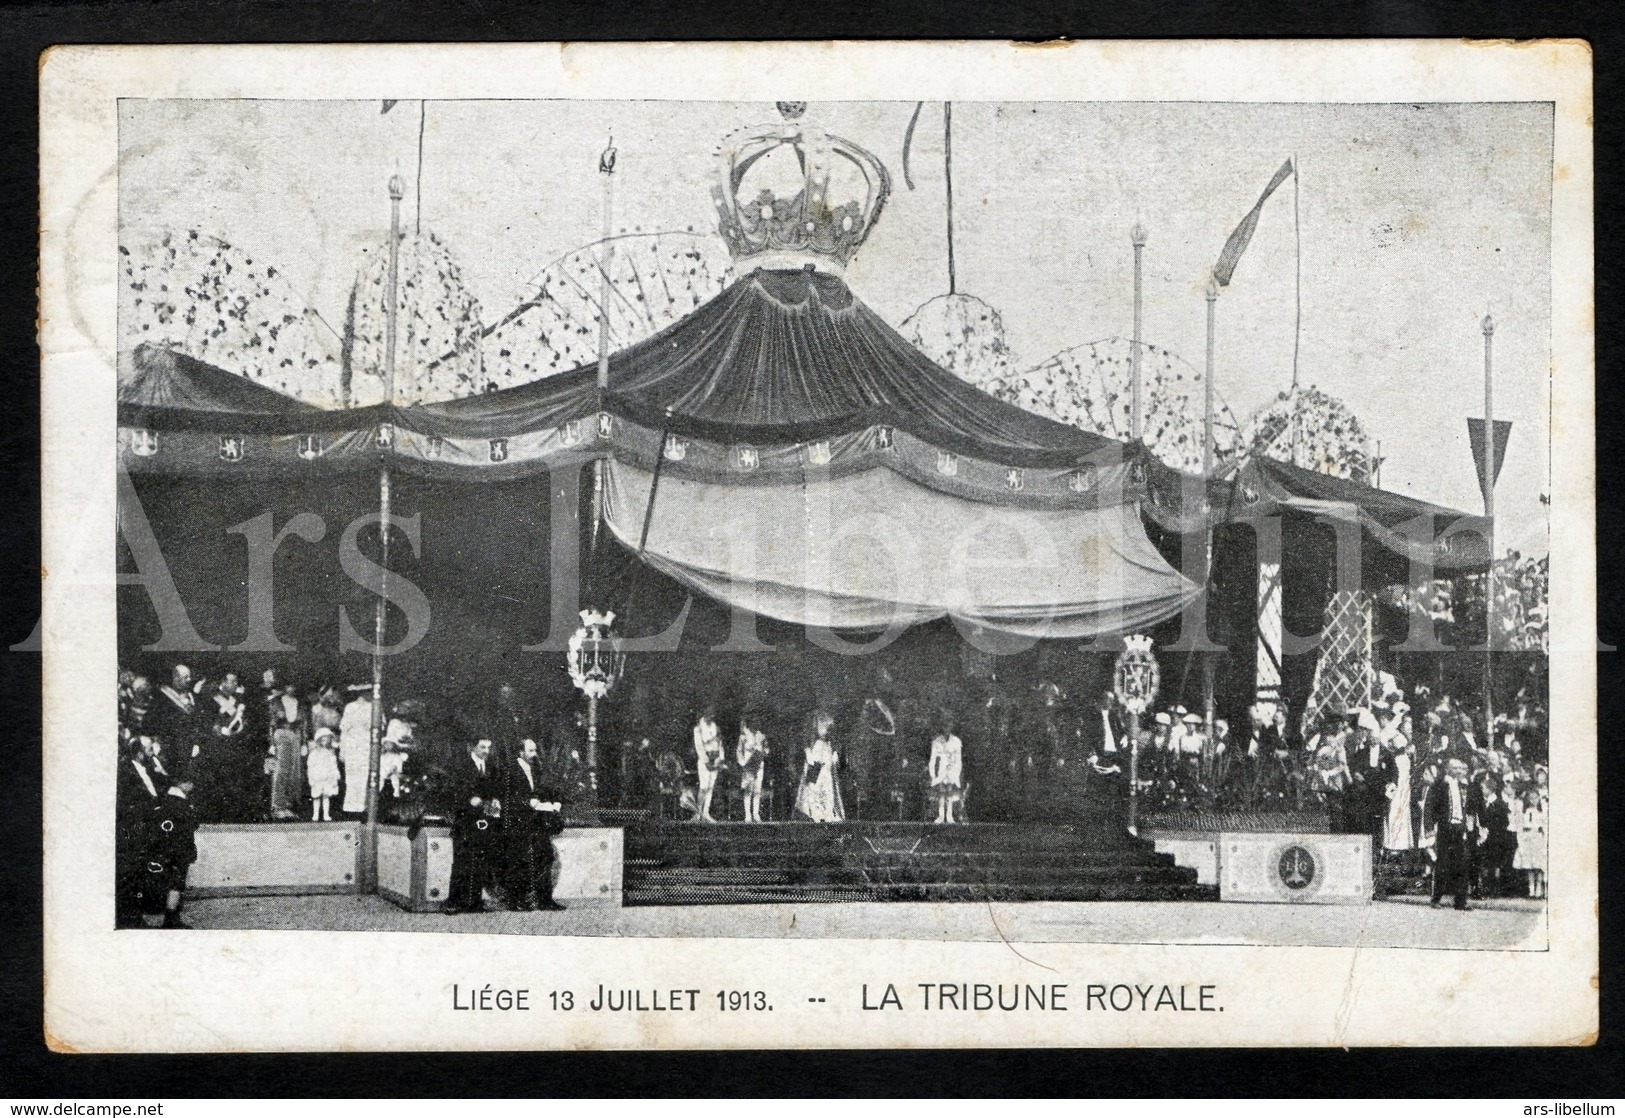 Postcard / ROYALTY / Belgique / België / Roi Albert I / Reine Elisabeth / Joyeuse Entrée Famille Royale / Liège / 1913 - Liege